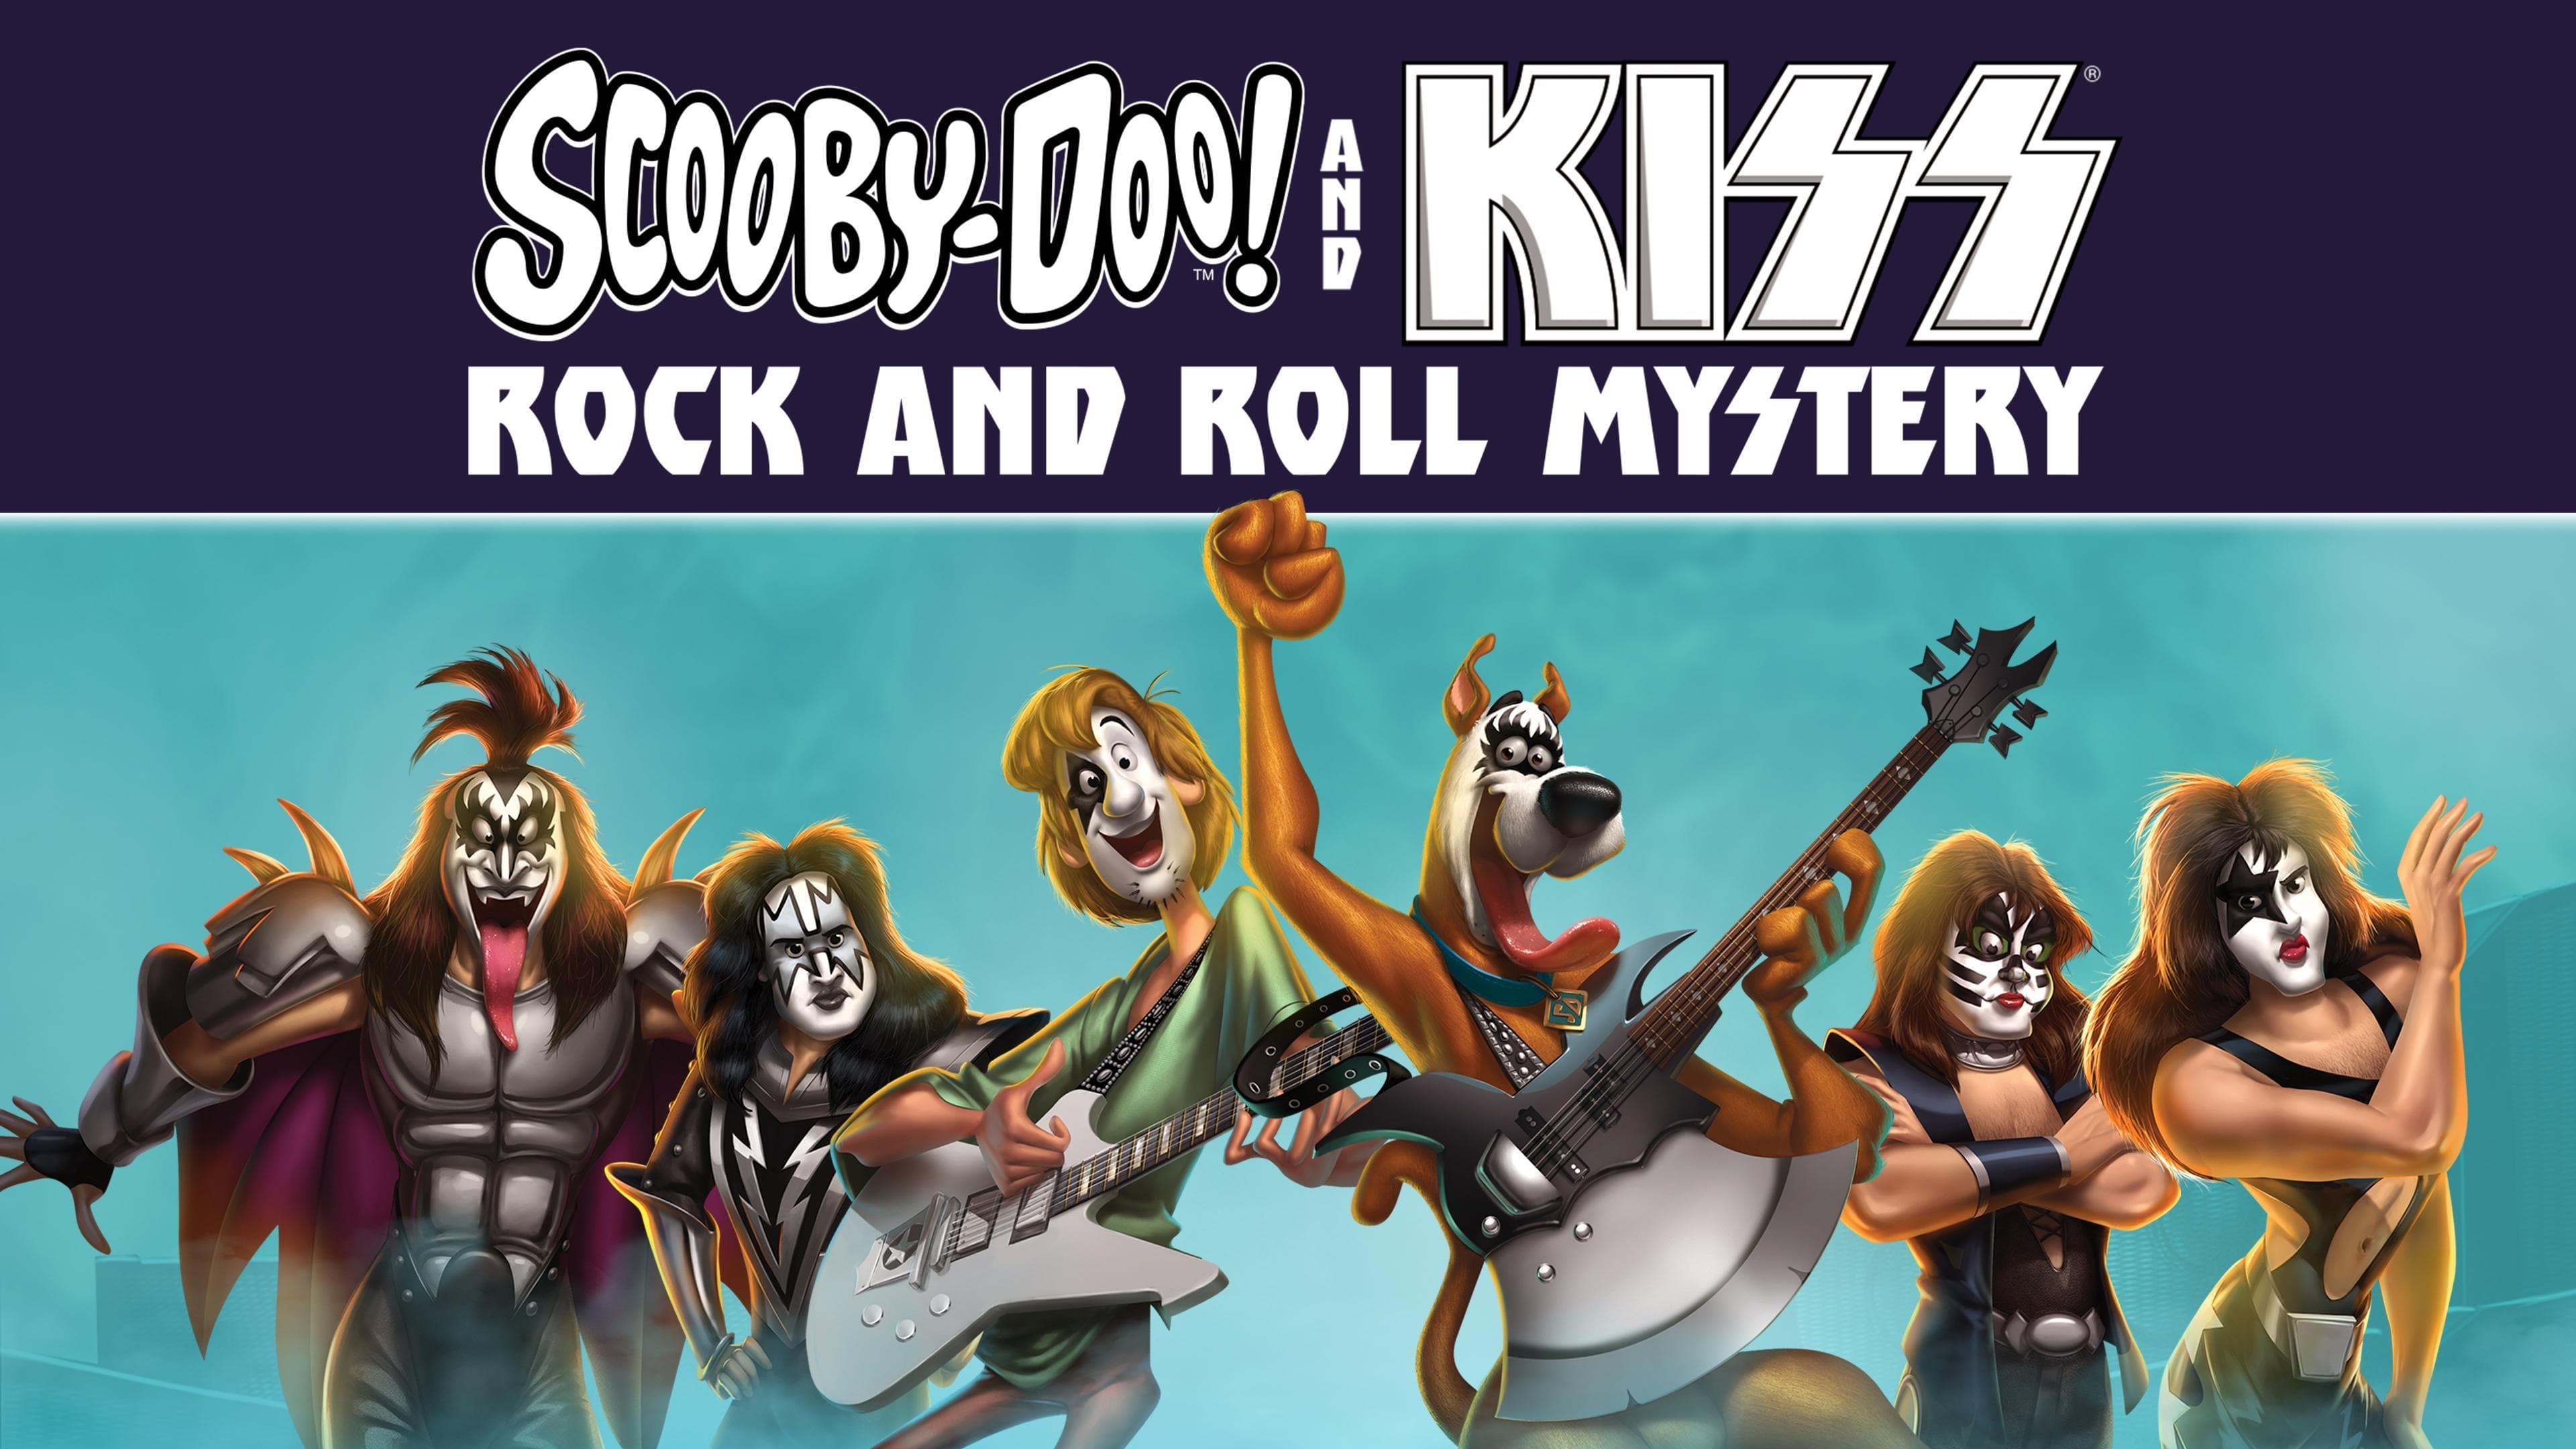 ¡Scooby Doo! conoce a Kiss: Misterio a ritmo de Rock and Roll